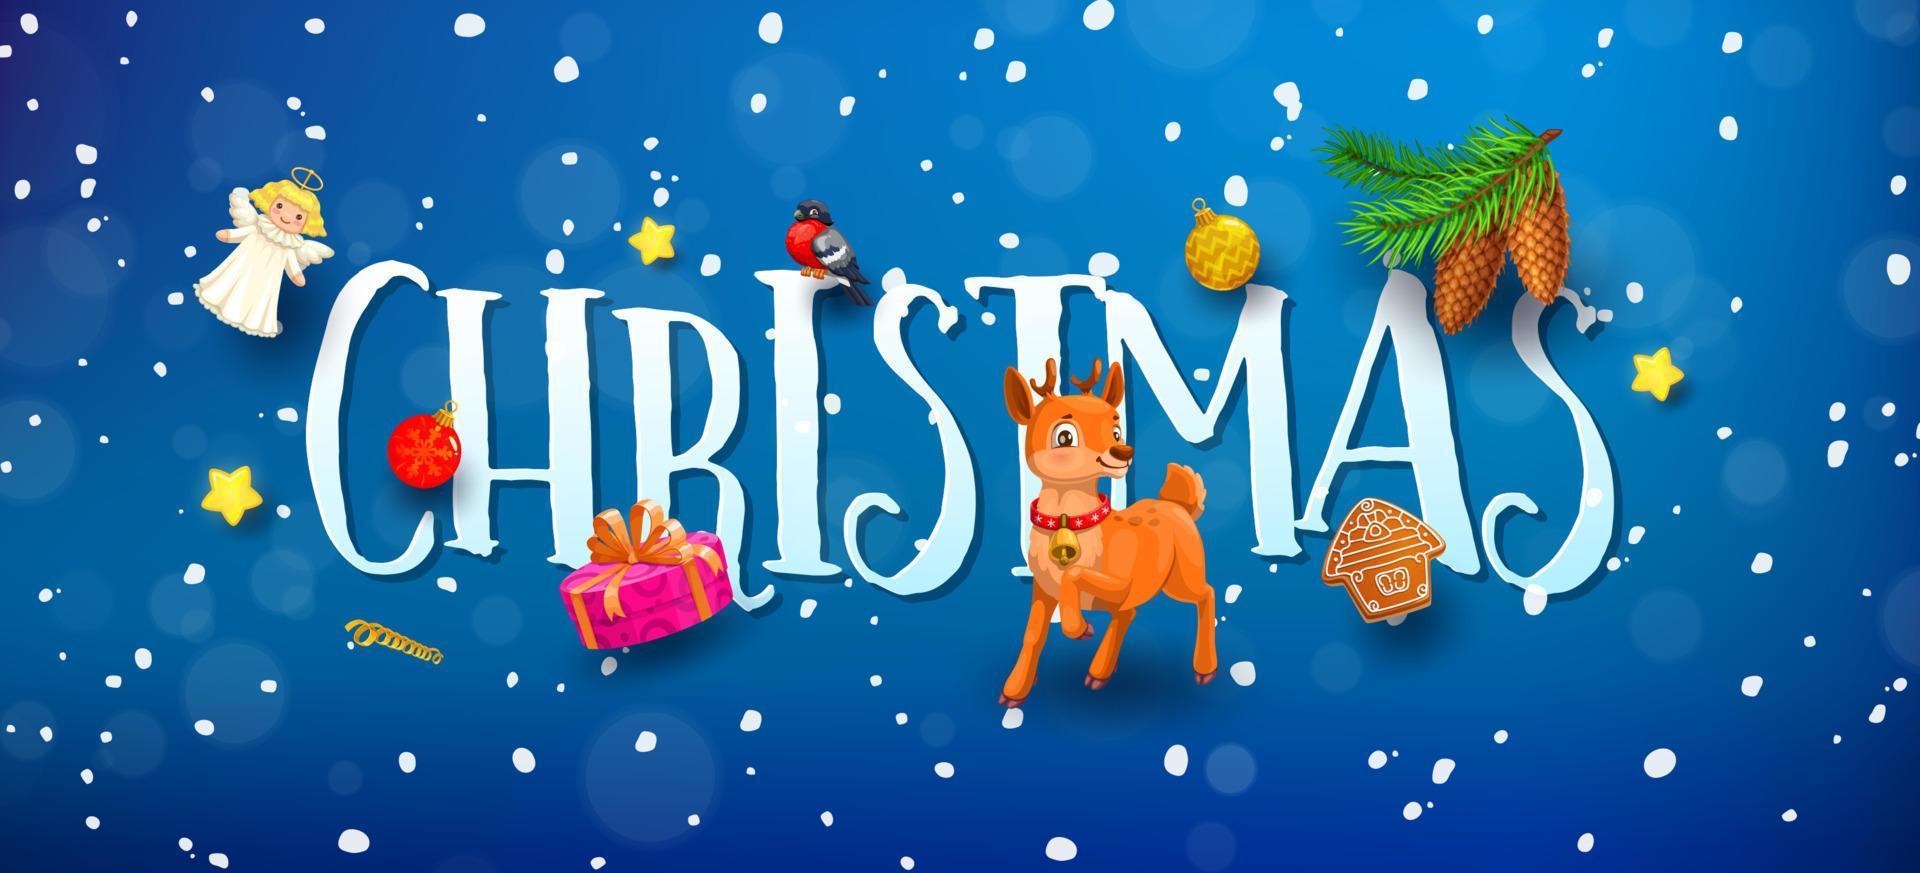 Christmas 3d banner with cartoon deer, lettering vector